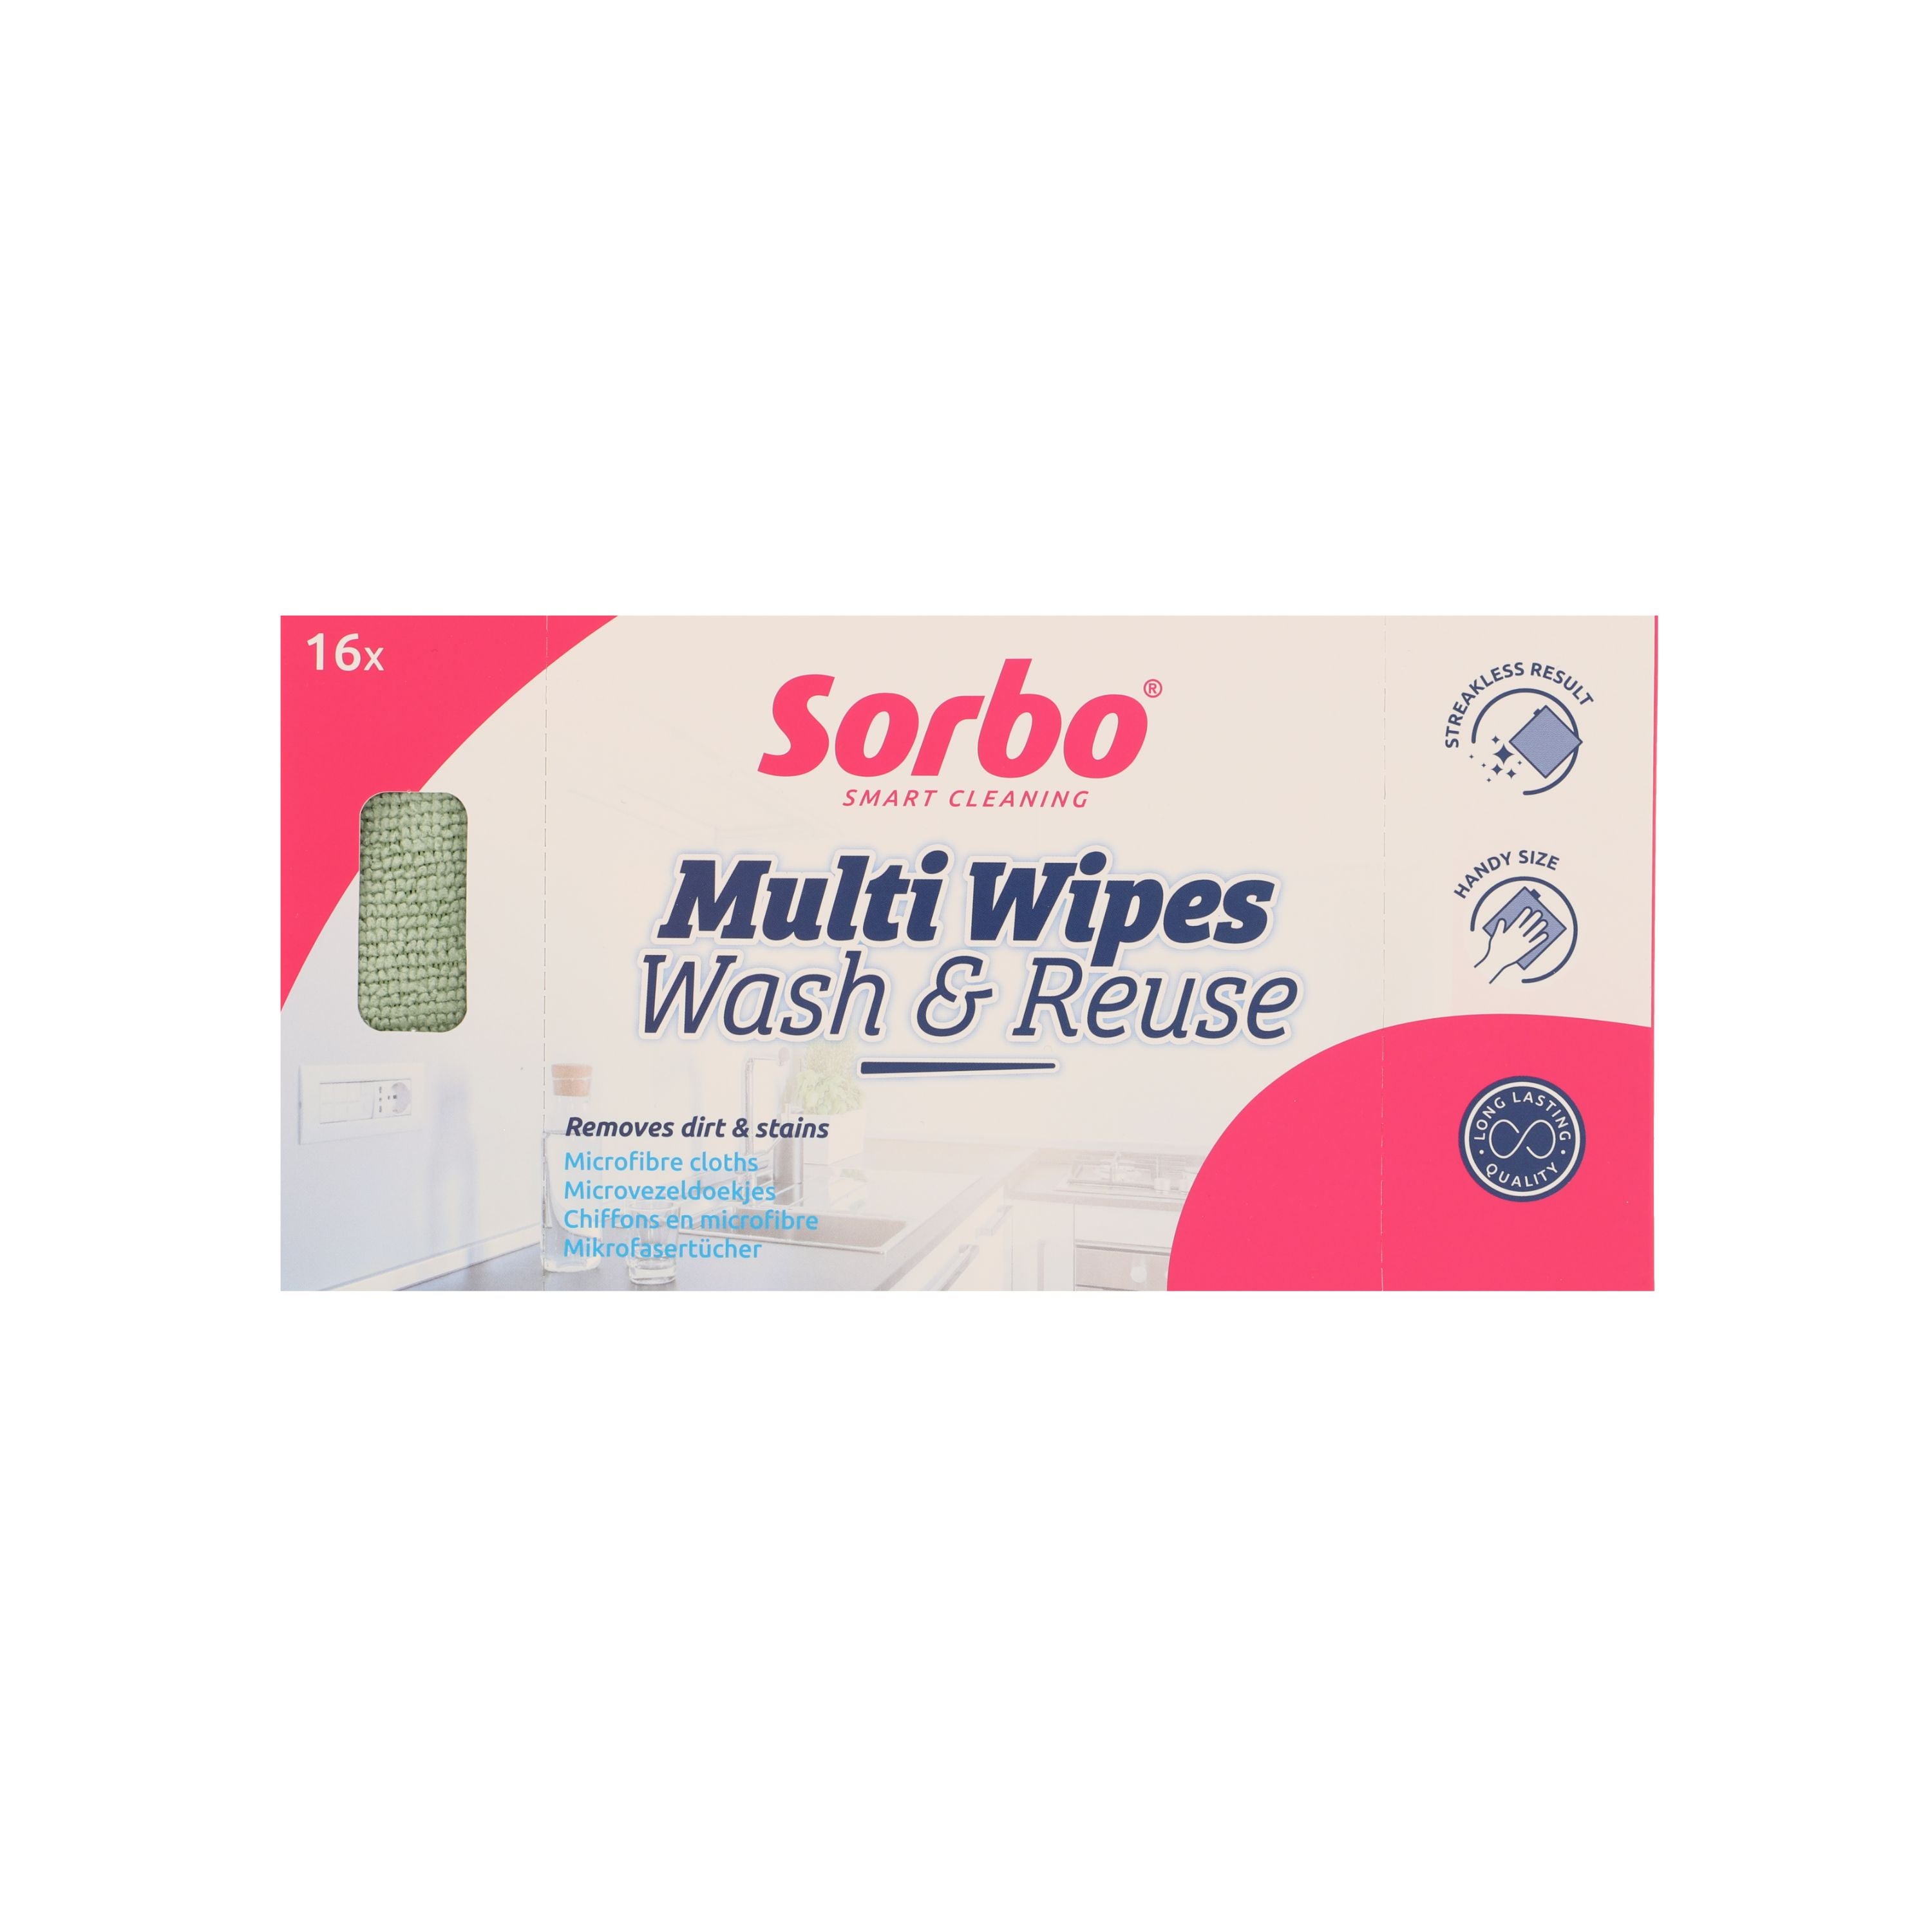 Sorbo Pack of 16 Multi Wipes